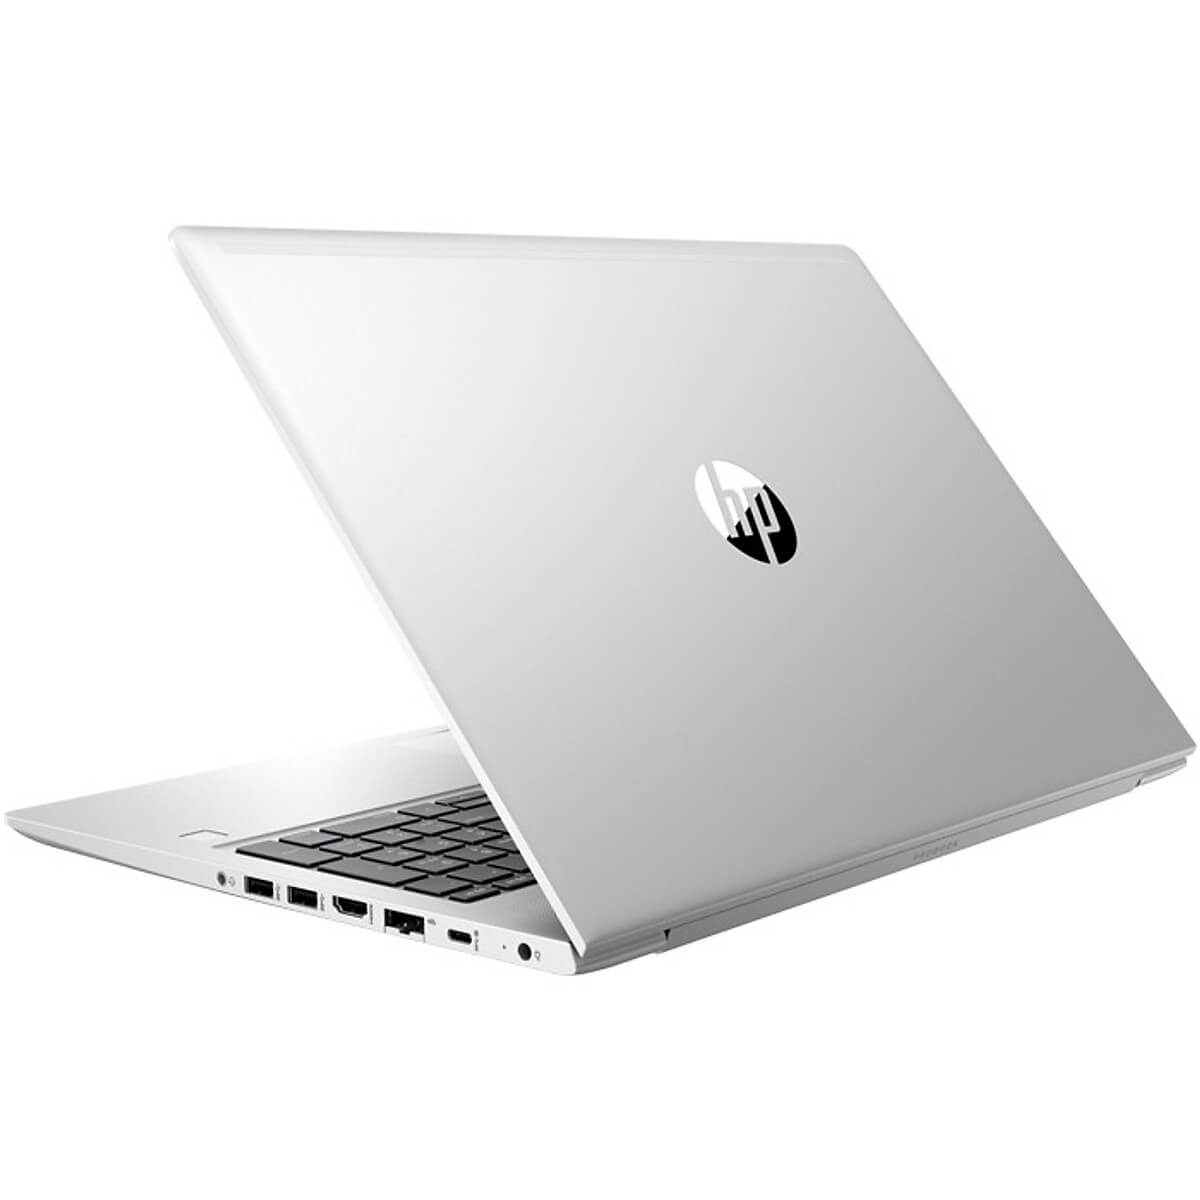 Laptop HP Probook 450 G7 Core i5-10210U, RAM 8GB, SSD 256GB, 15.6 inch FHD